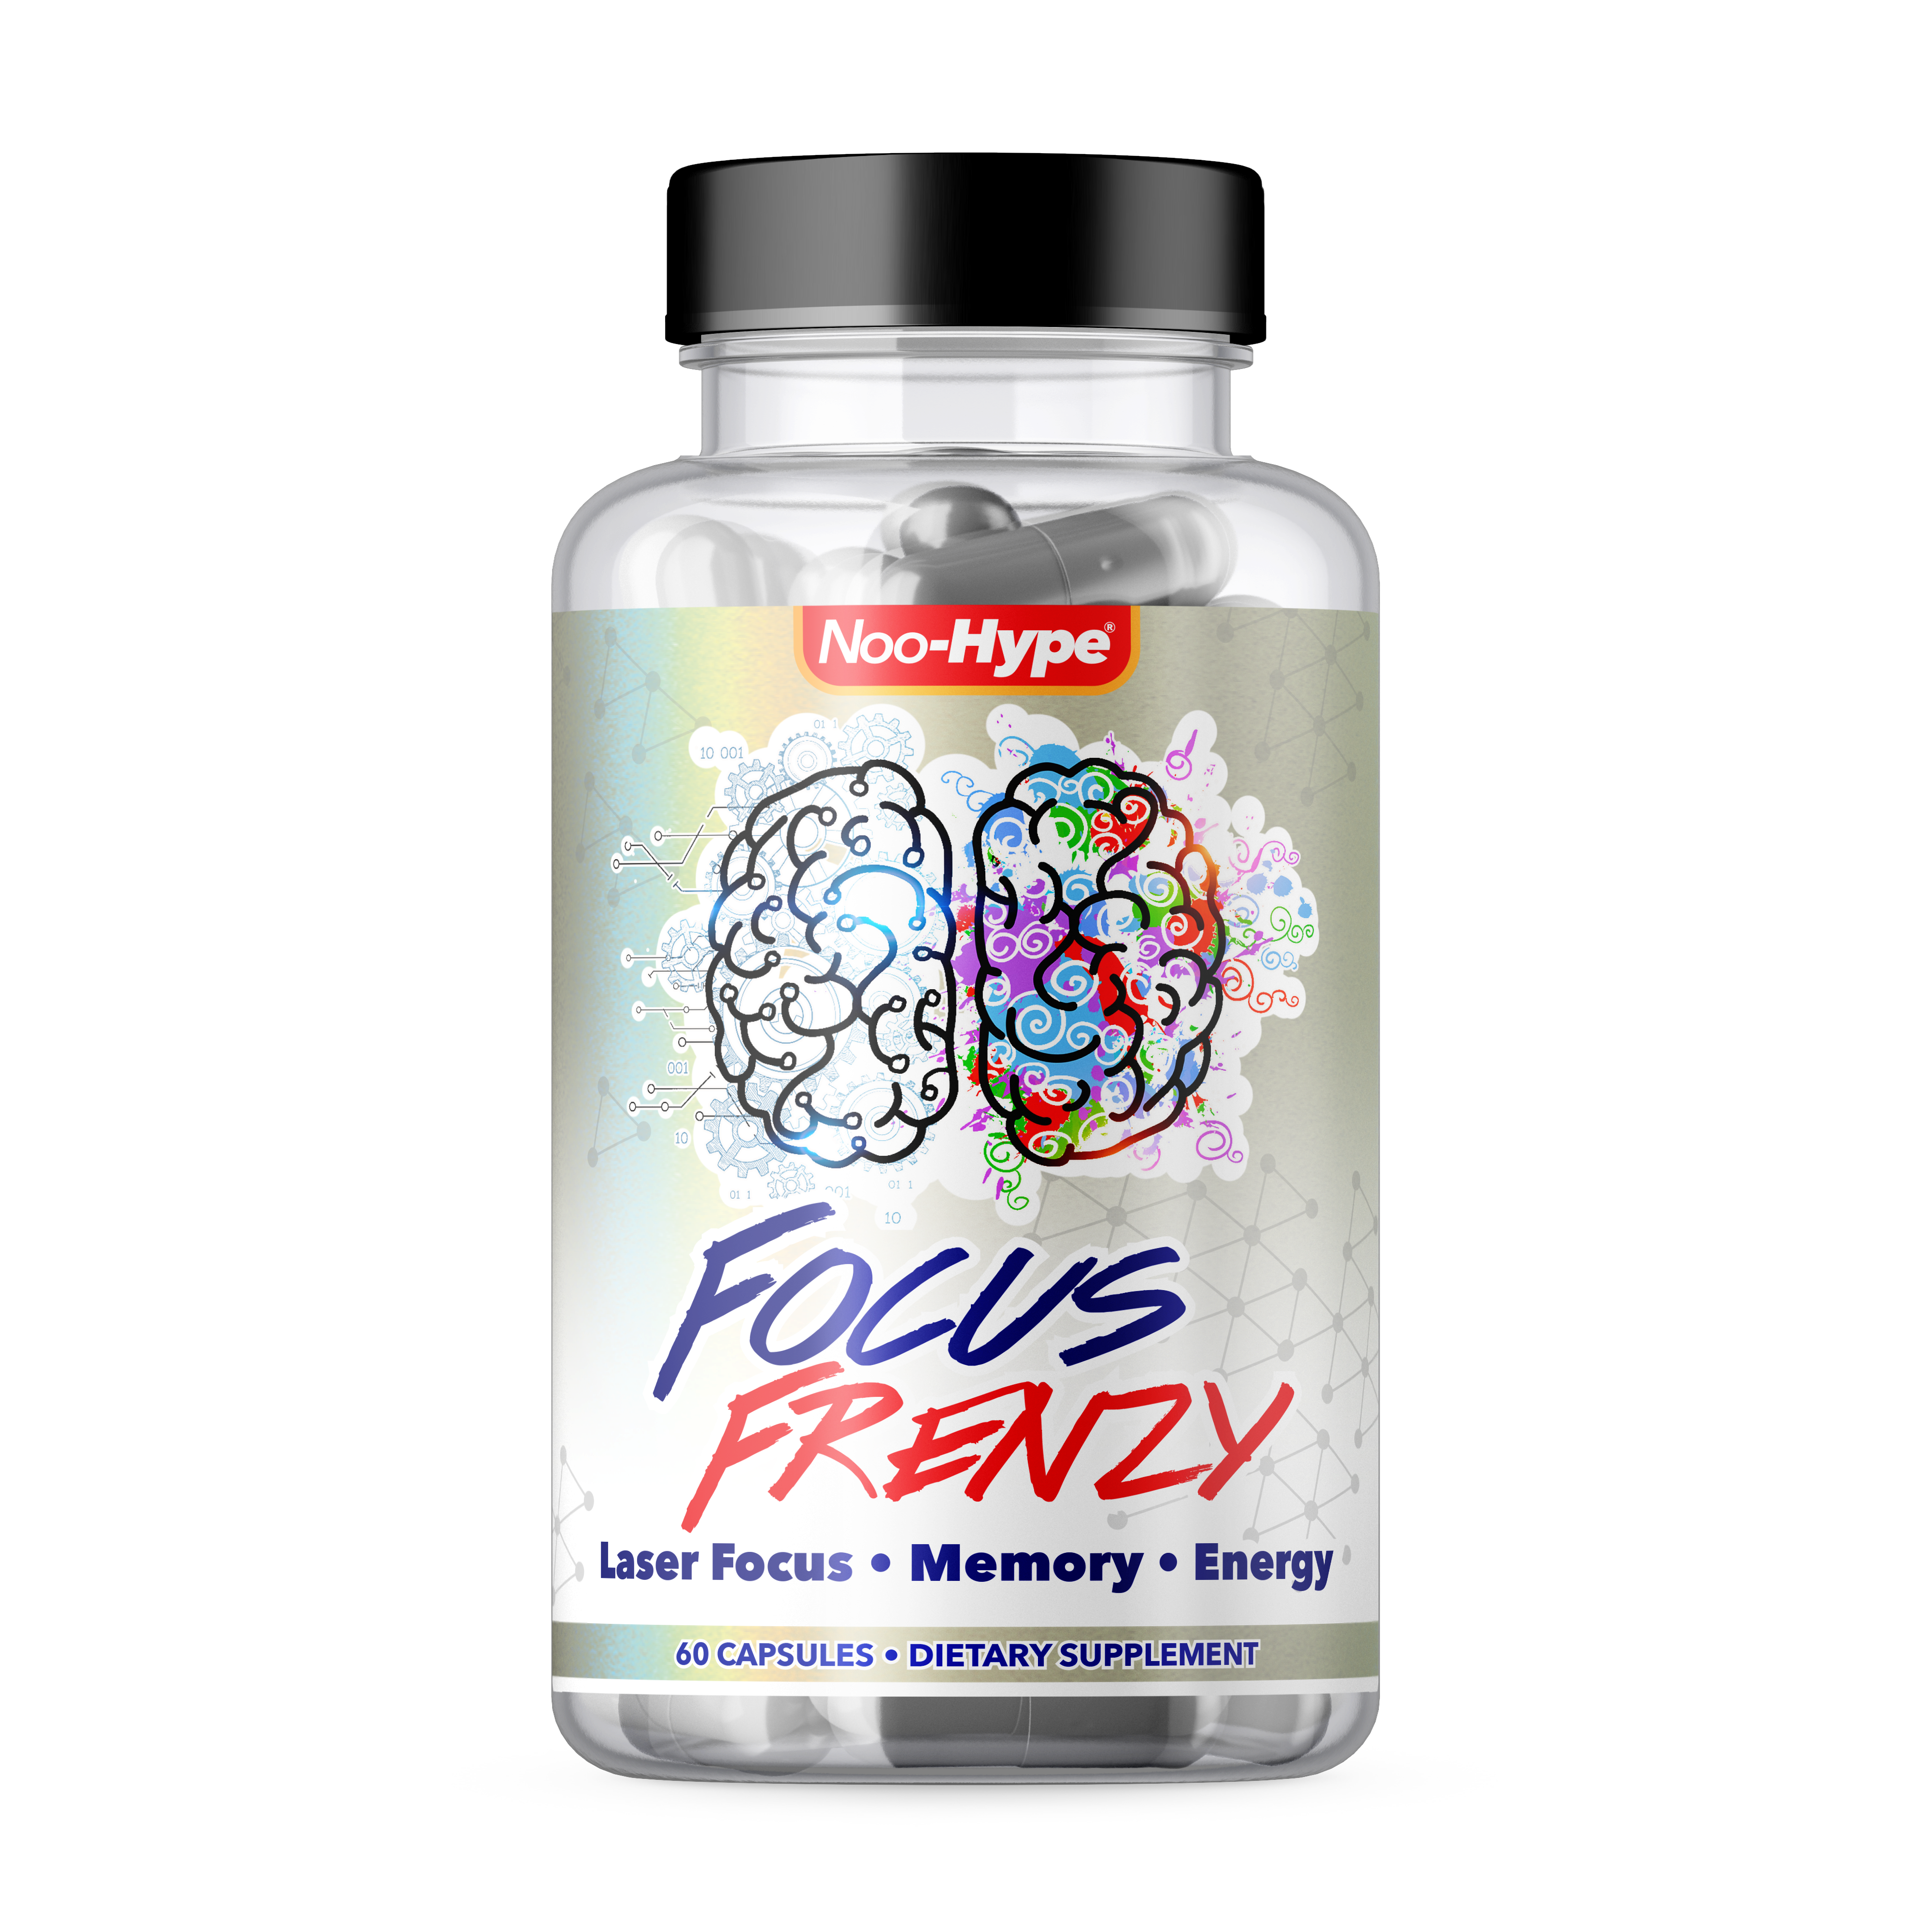 Noo-HYPE Focus Frenzy, 60 capsule, Laser Focus, Memory, Energy formula